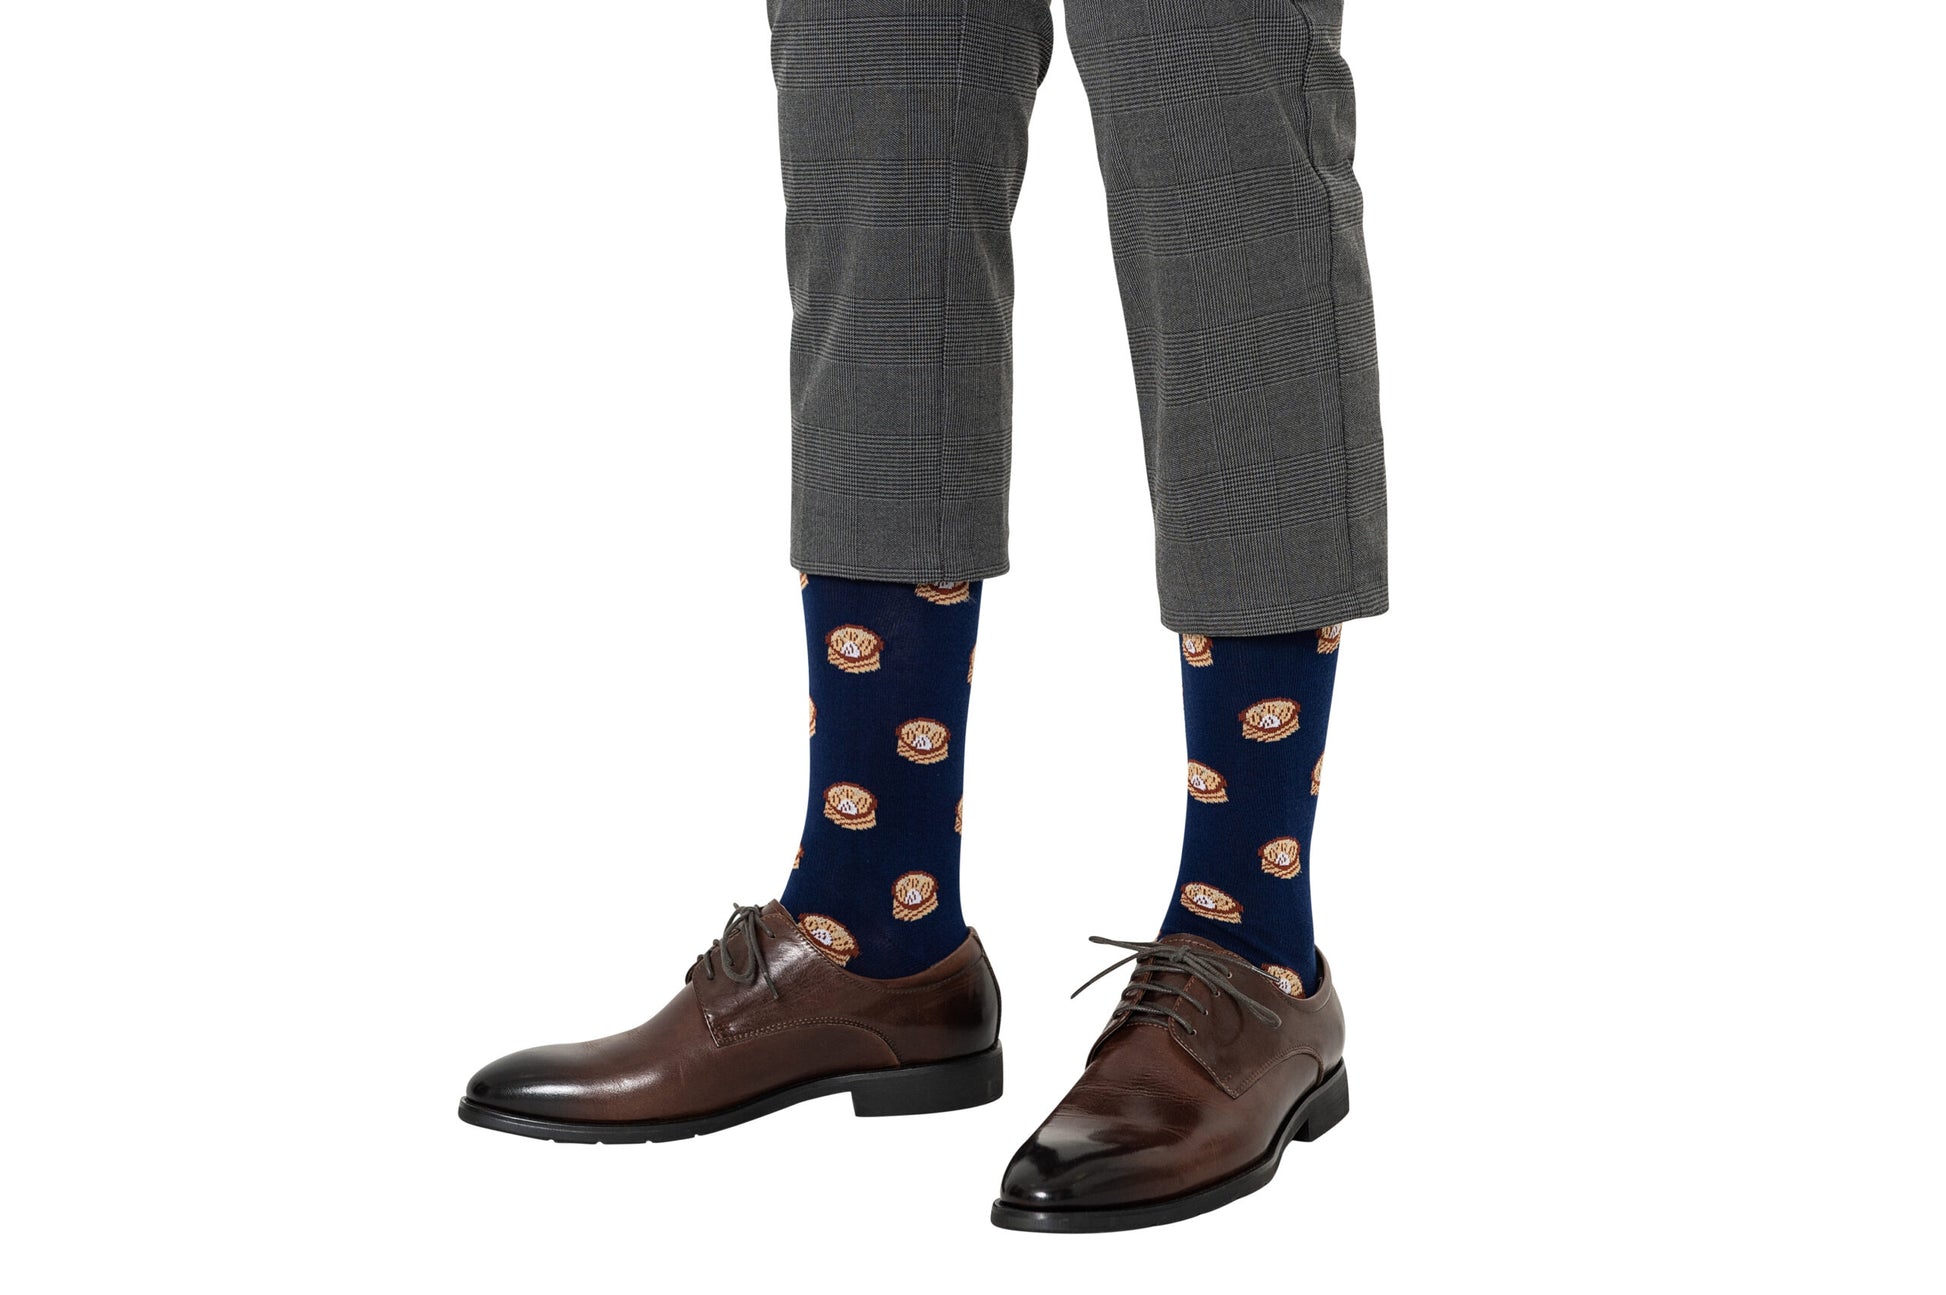 A man wearing a pair of Dumpling Socks.